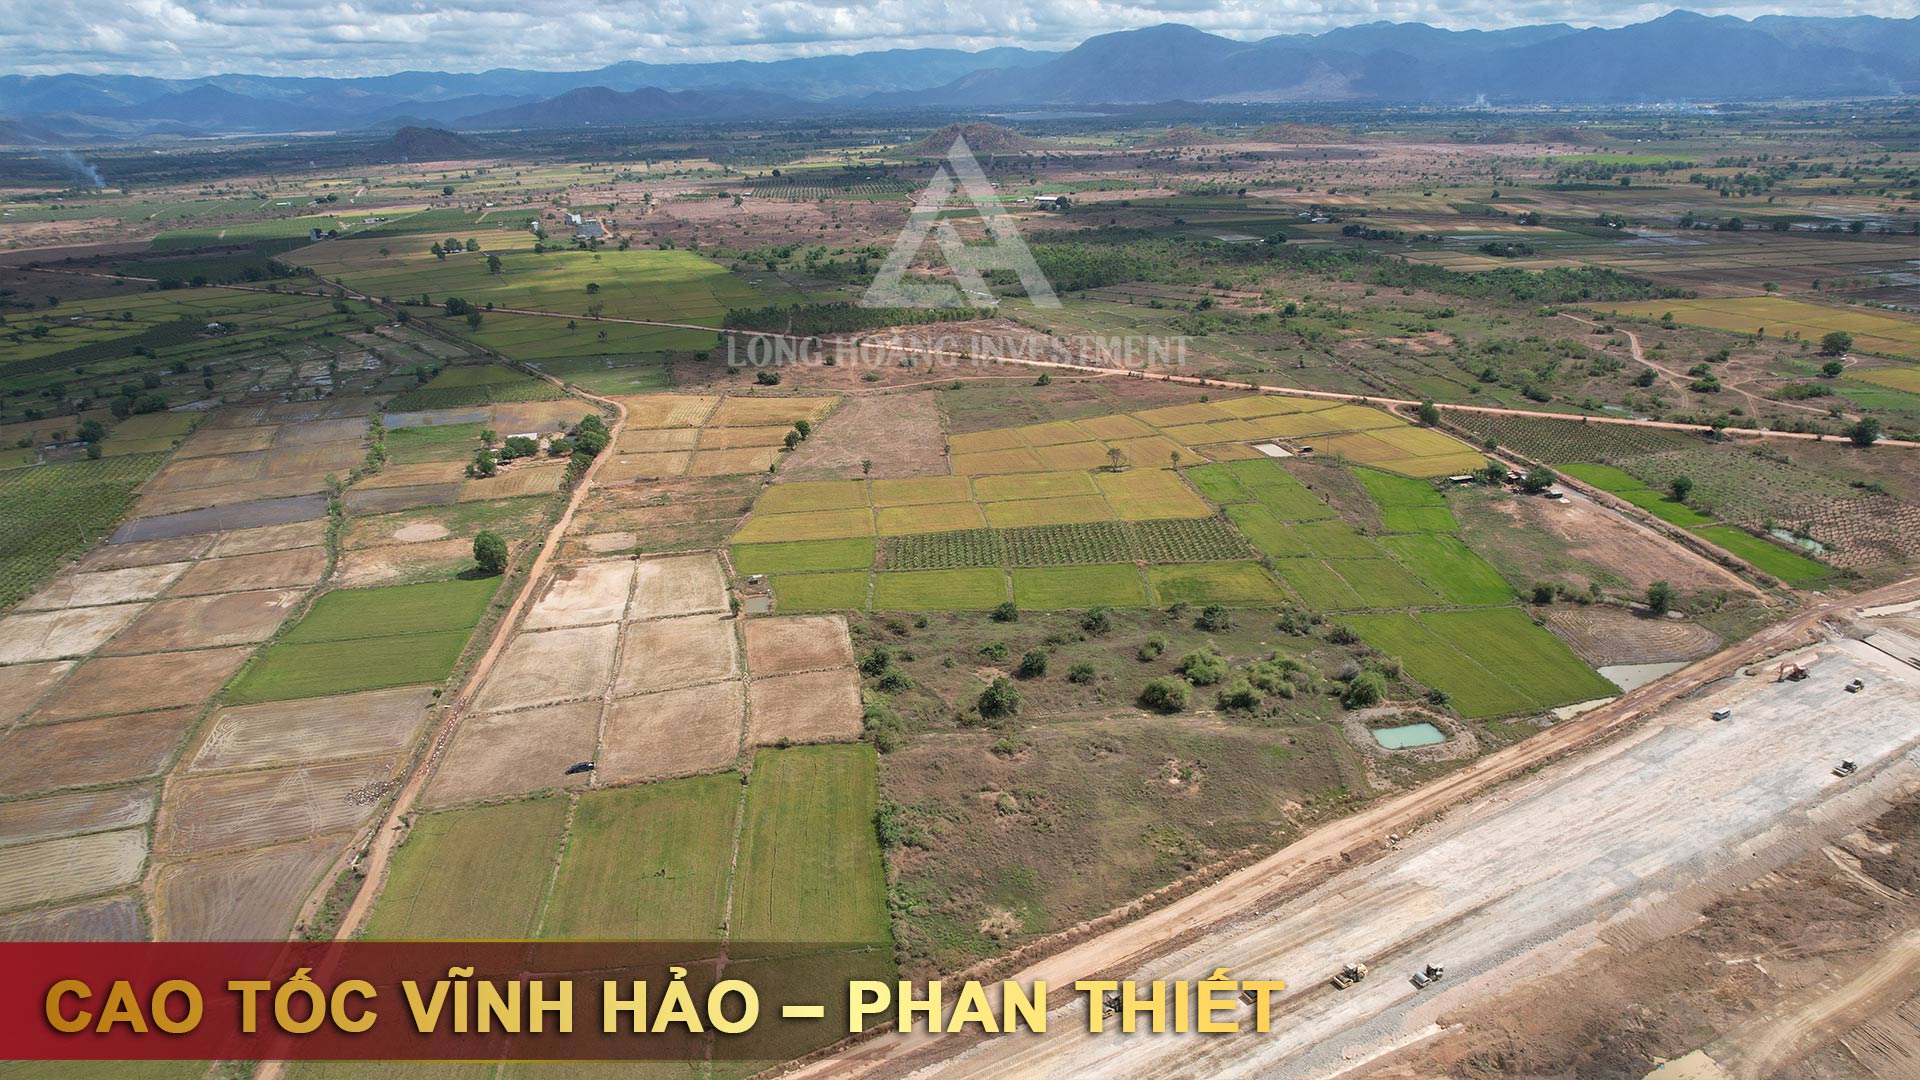 Cao Toc Vinh Hao – Phan Thiet